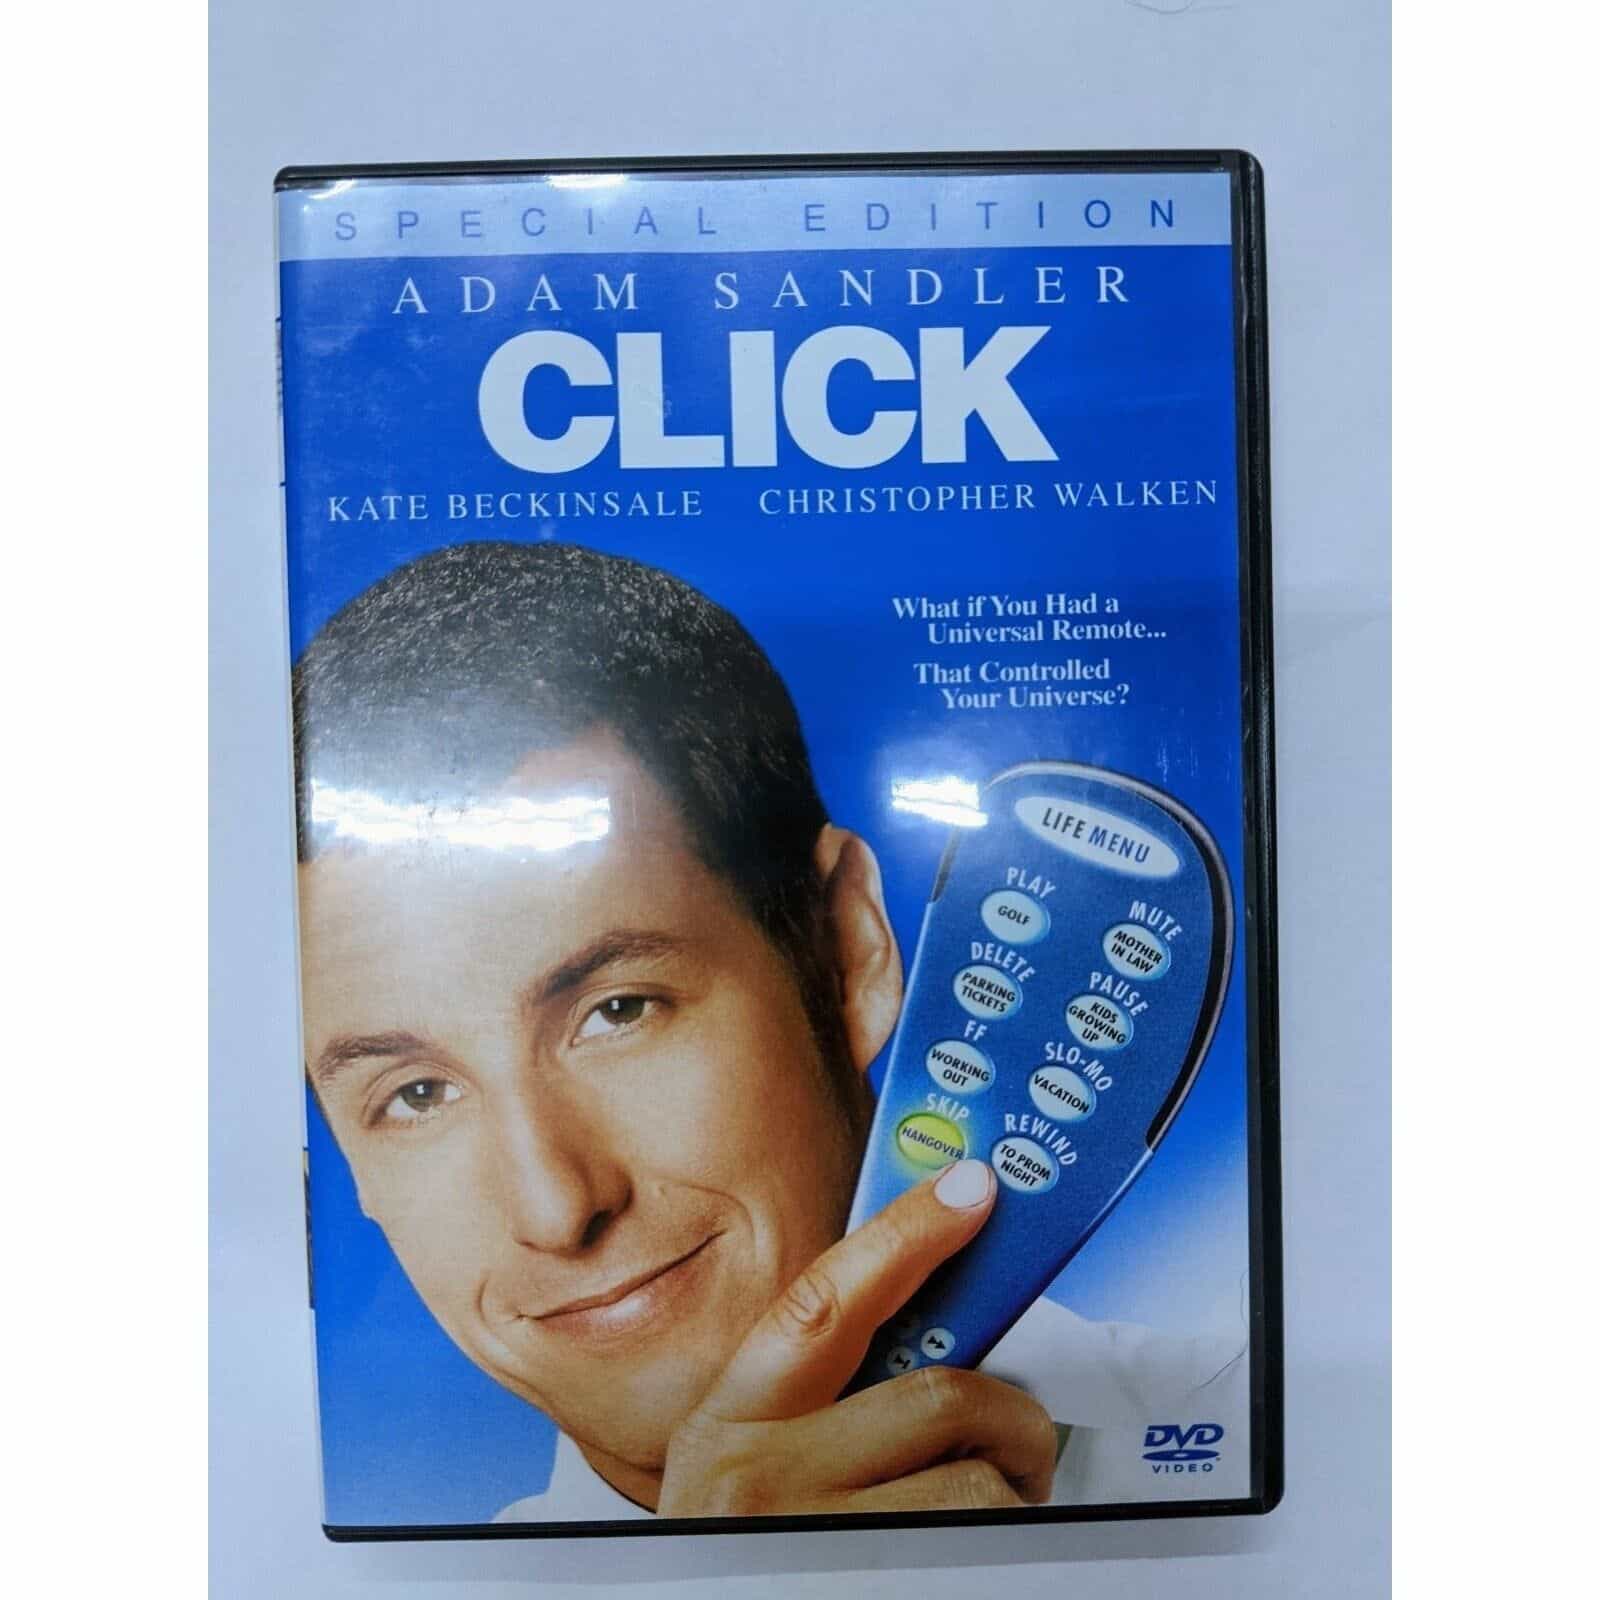 Click DVD movie – Special Edition